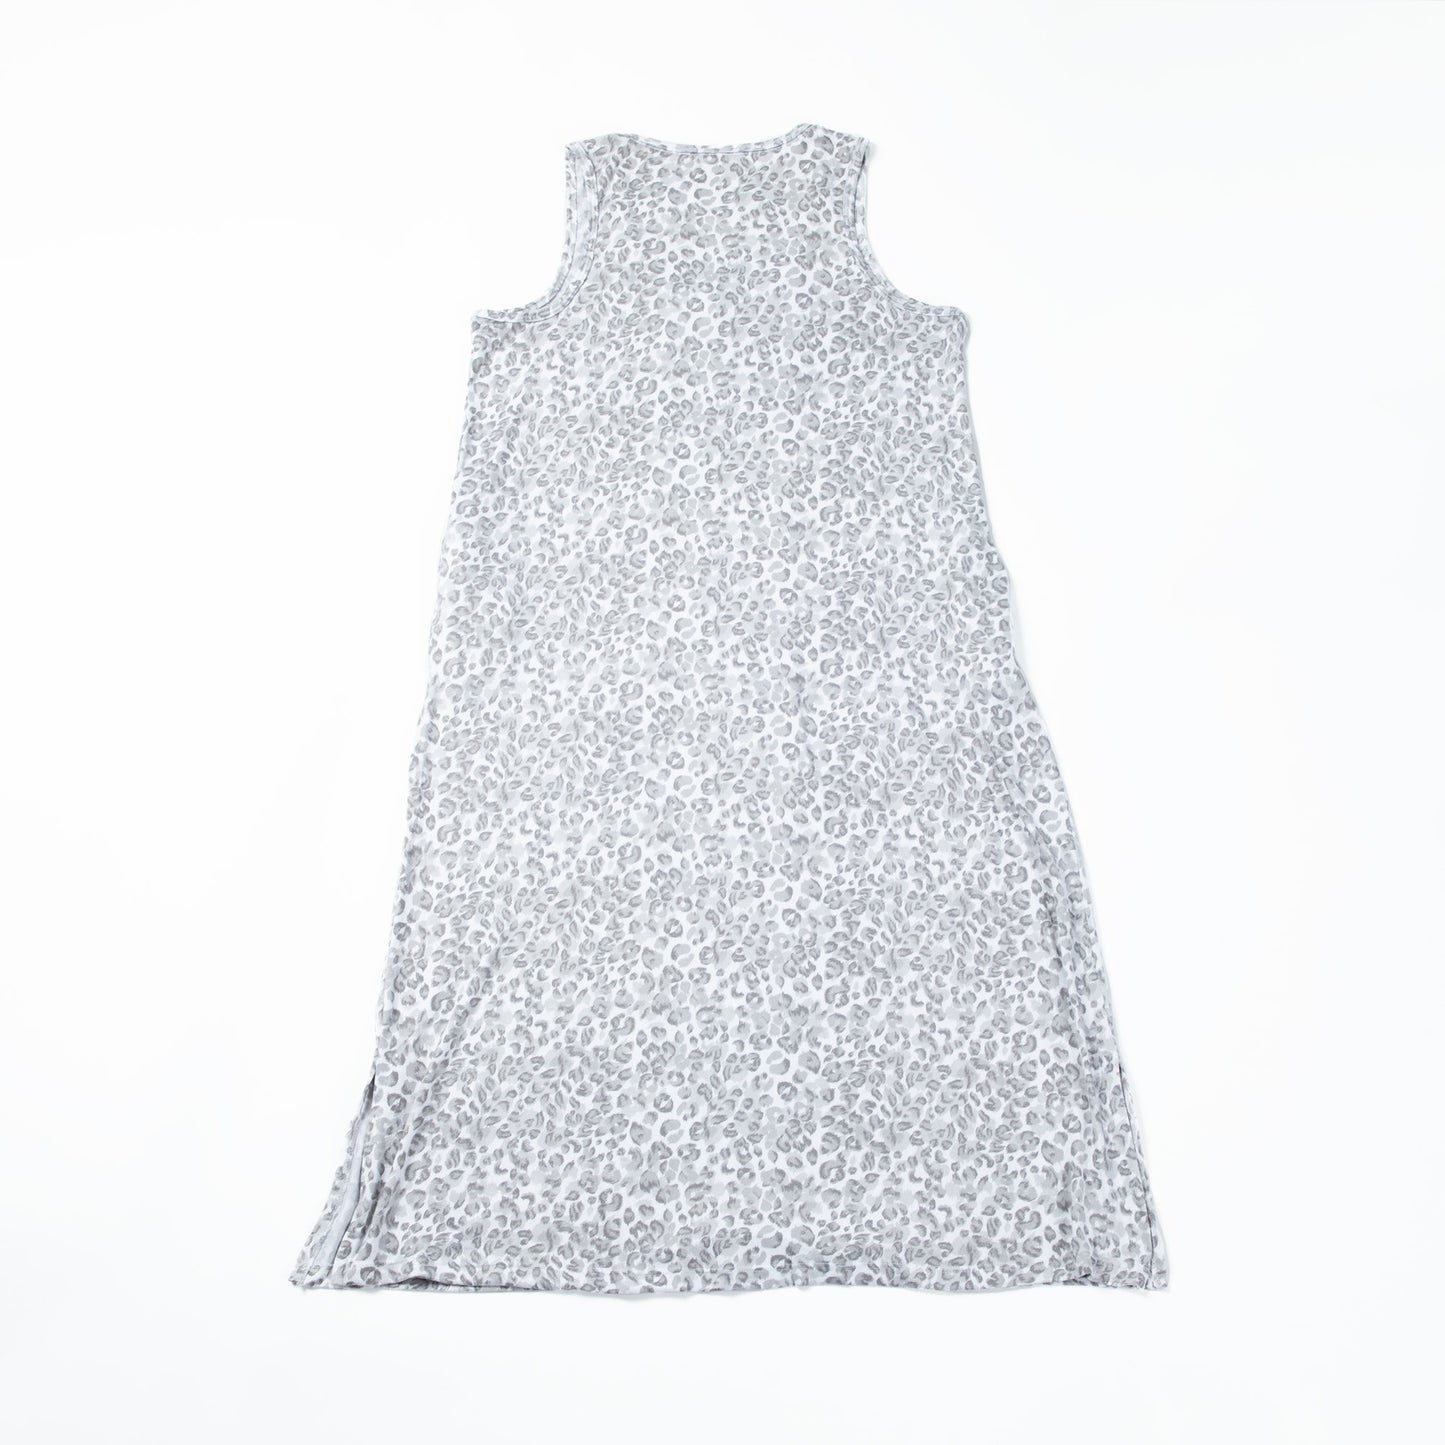 Lightweight Cheetah Print Sleeveless Nightgown